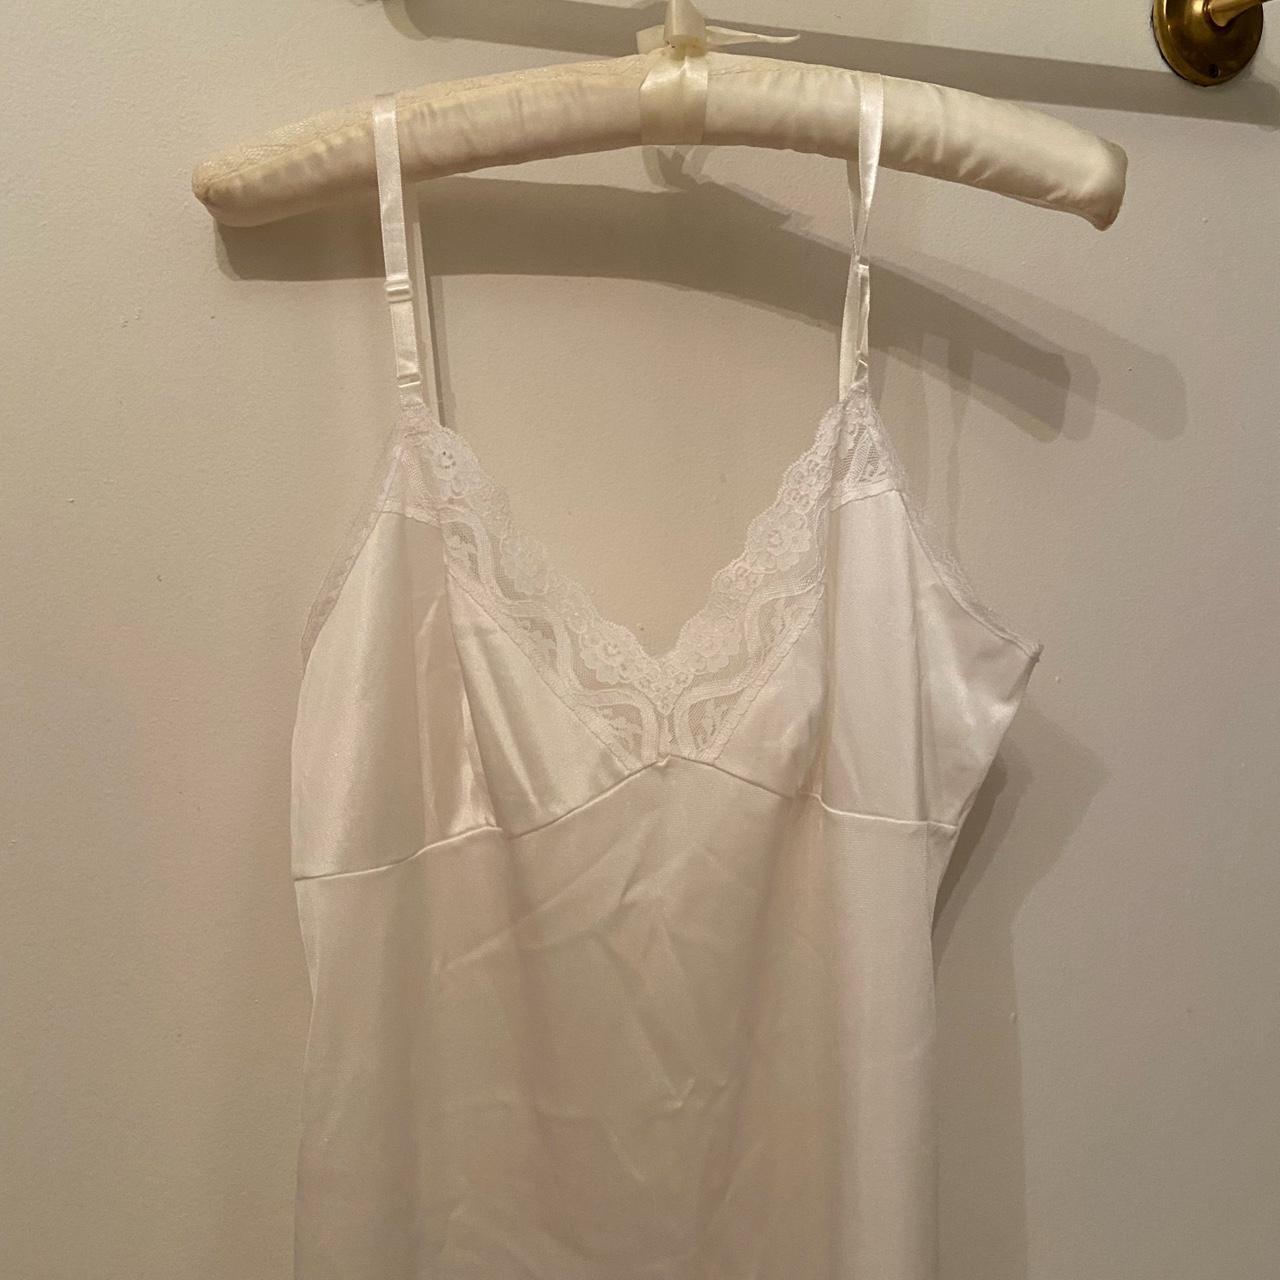 Sears Women's White Dress (3)